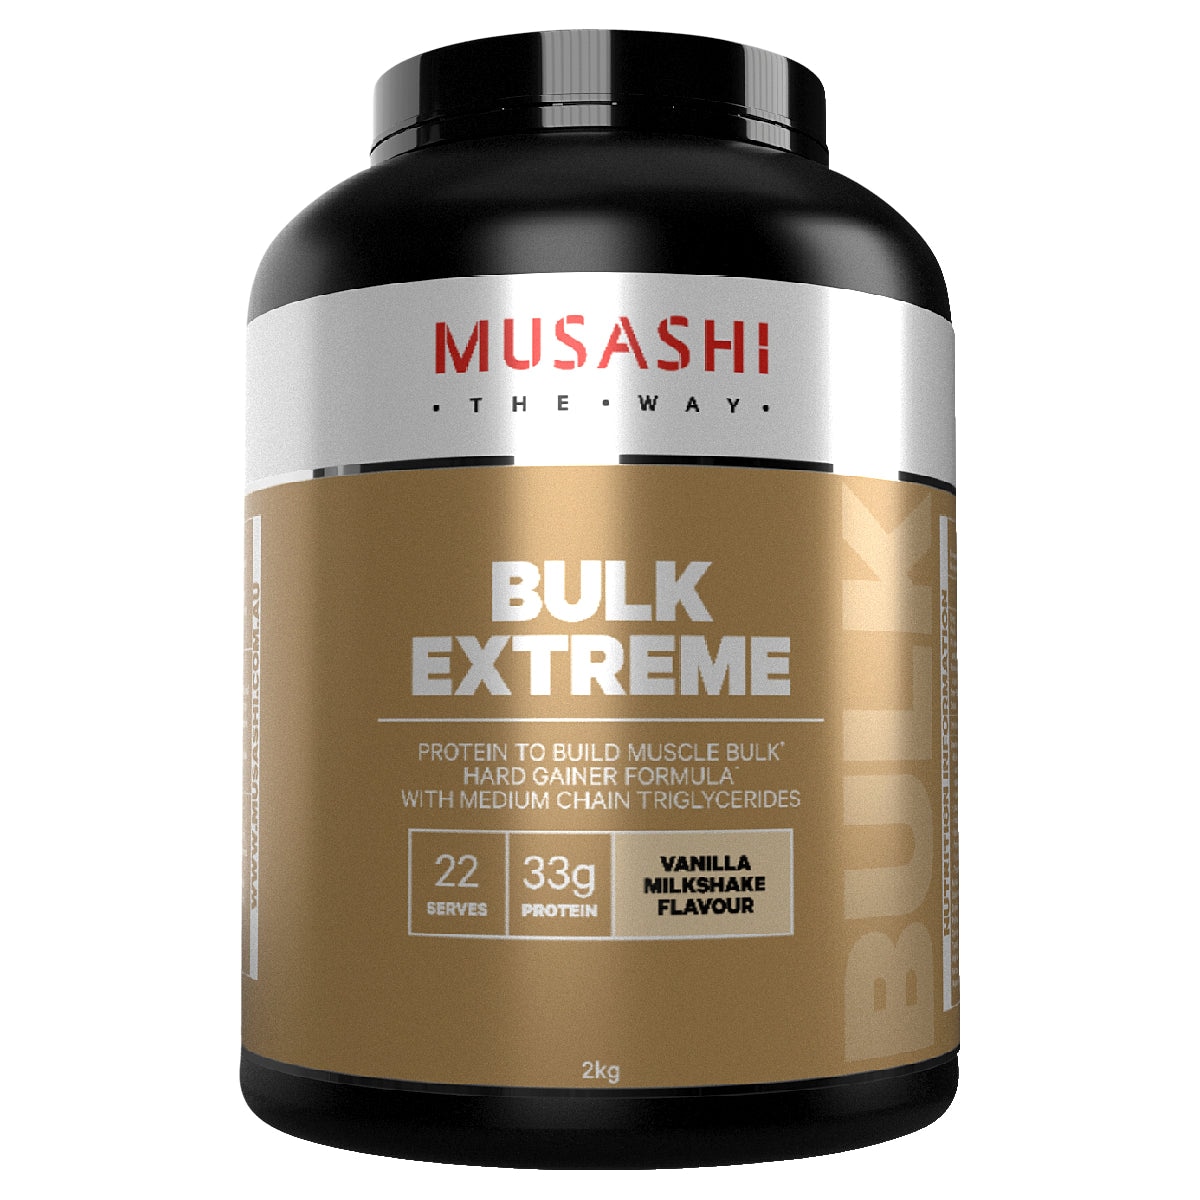 Musashi Bulk Extreme Protein Powder Vanilla Milkshake 2kg Australia